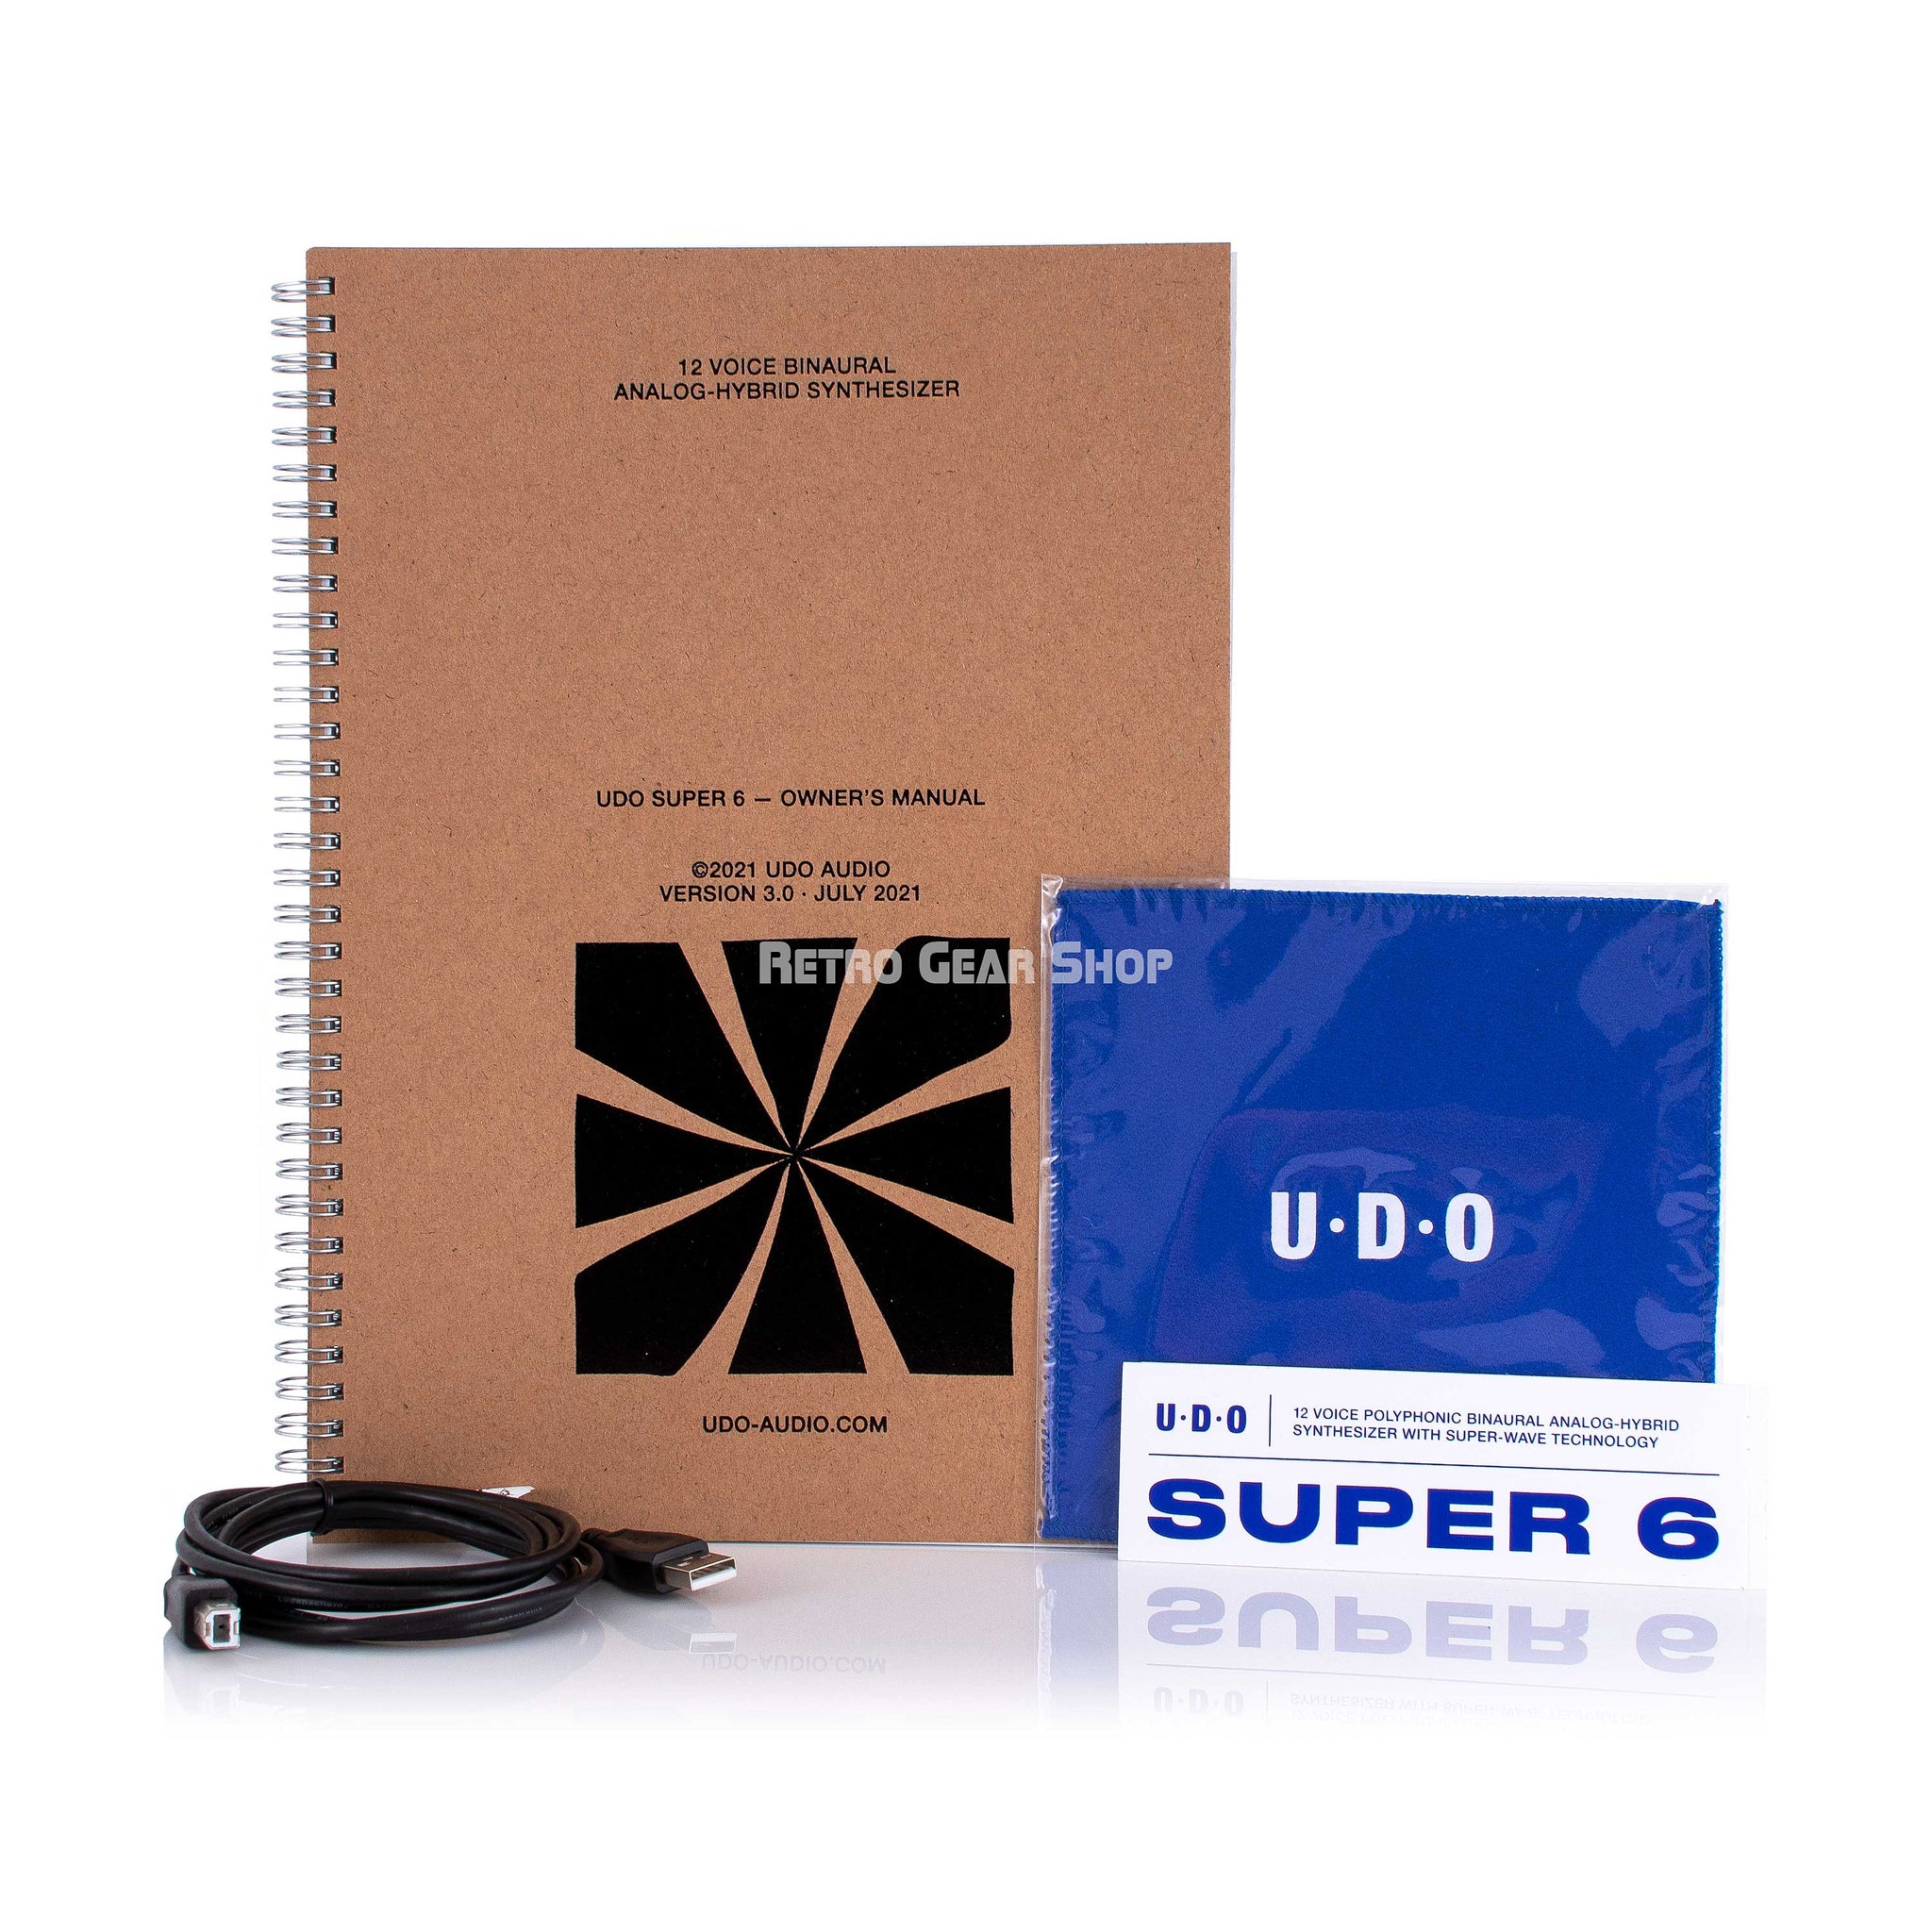 Udo Super 6 Desktop Blue Limited Edition Manual Cable Extras